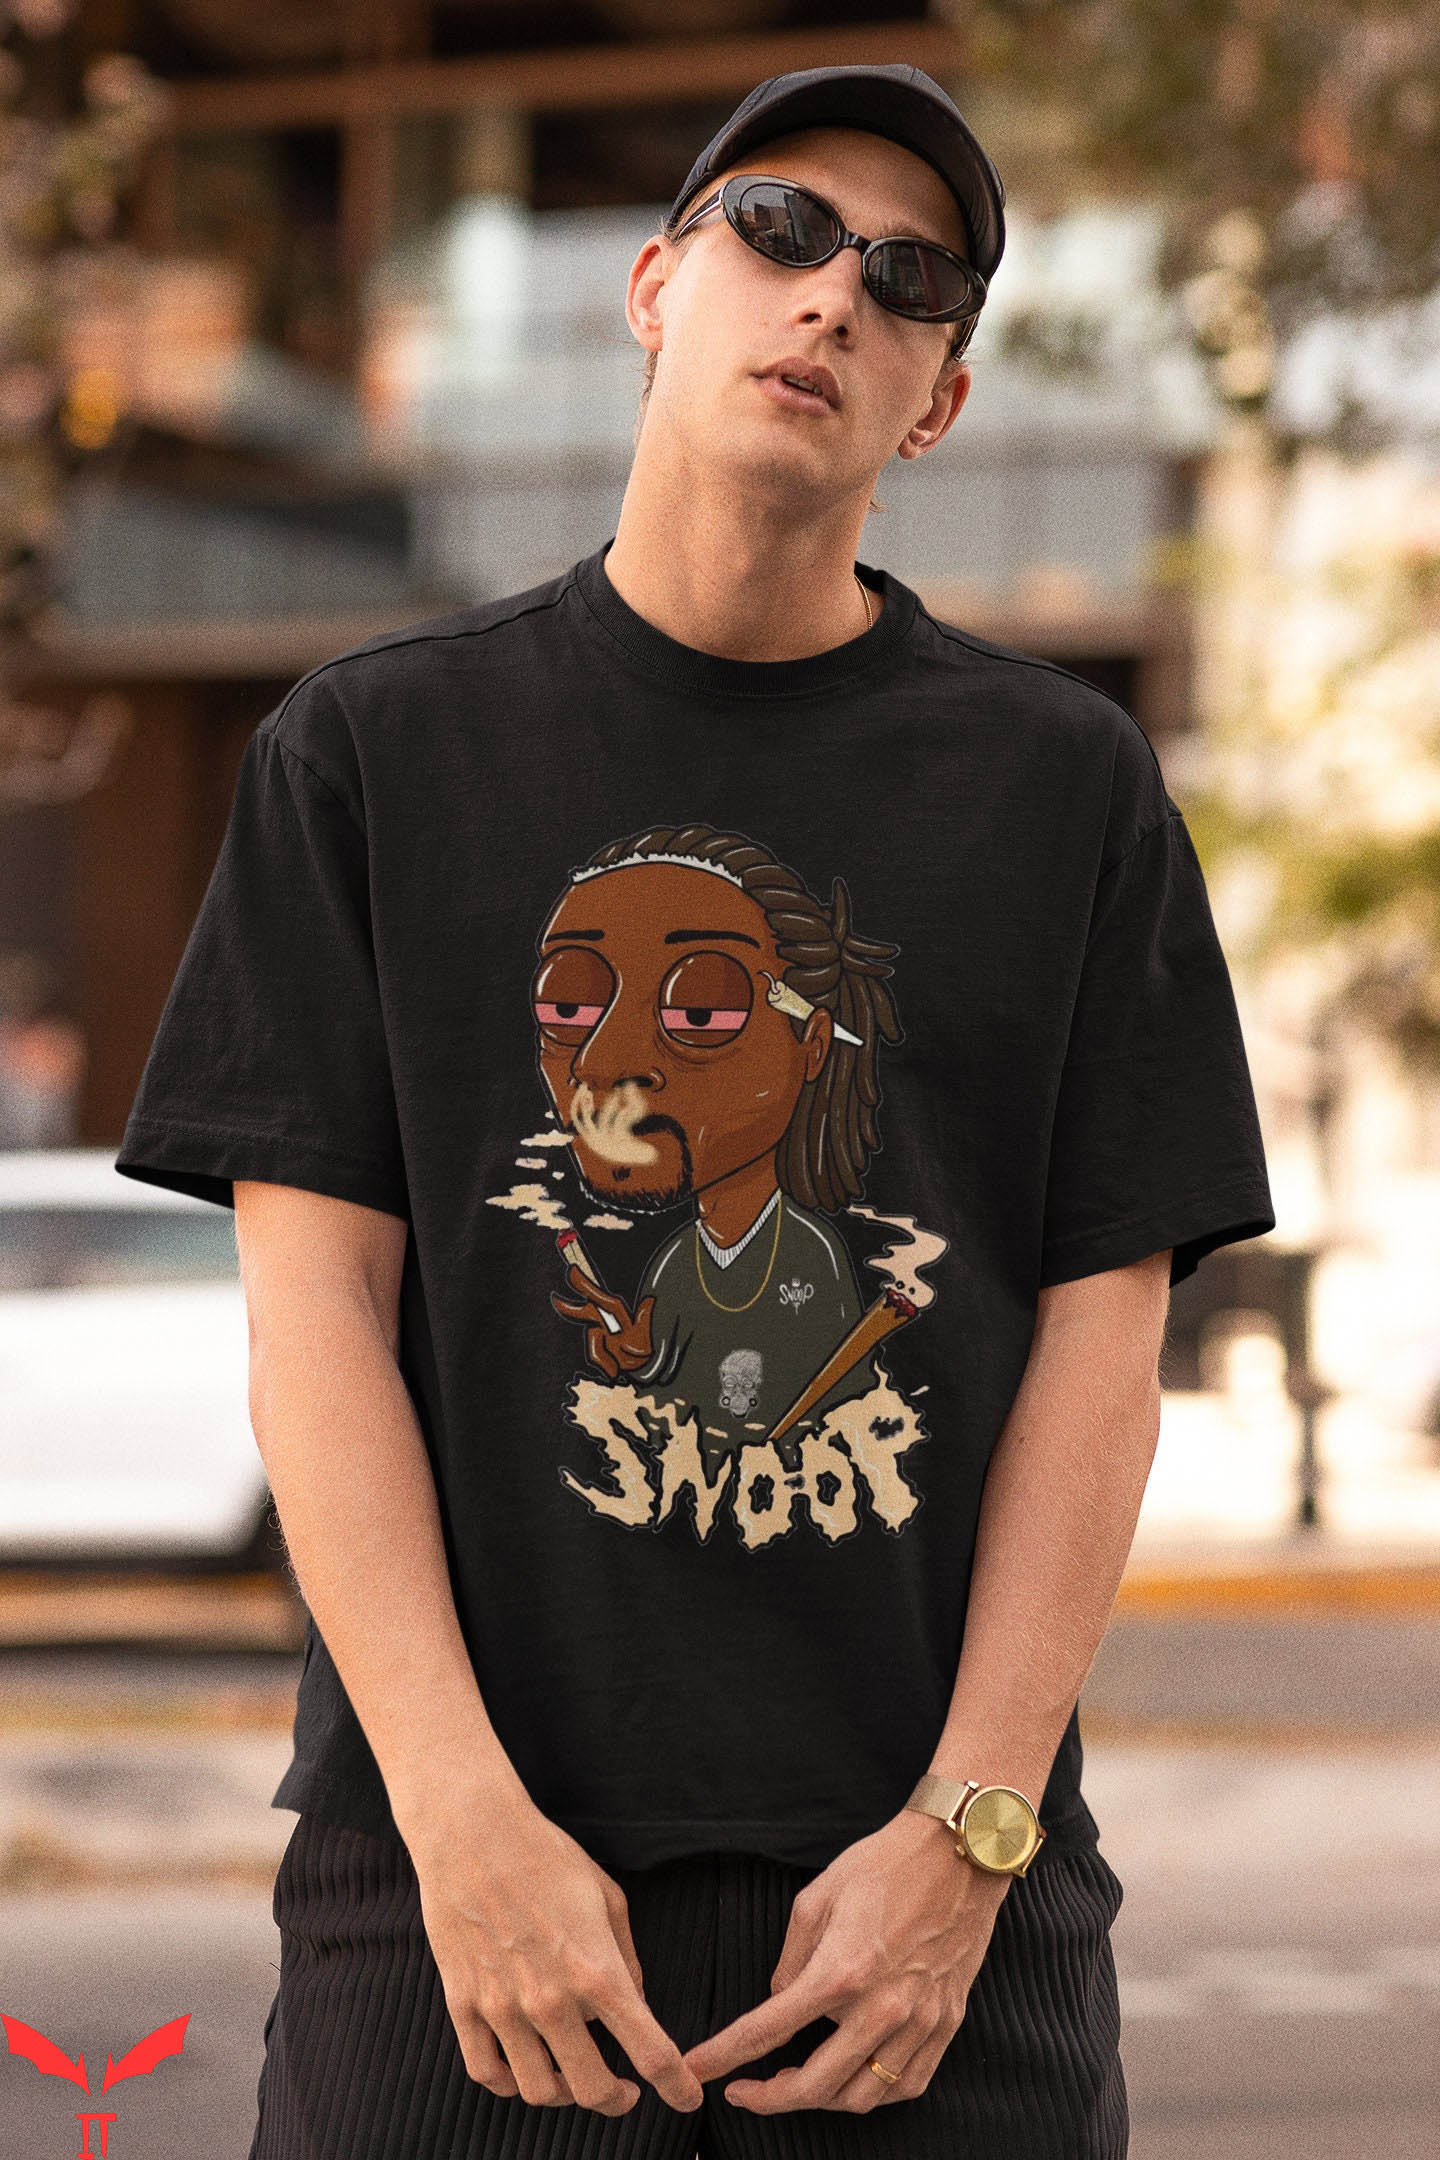 Snoop Dogg Vintage T-Shirt Vintage Snoop Dogg 90s T-shirt